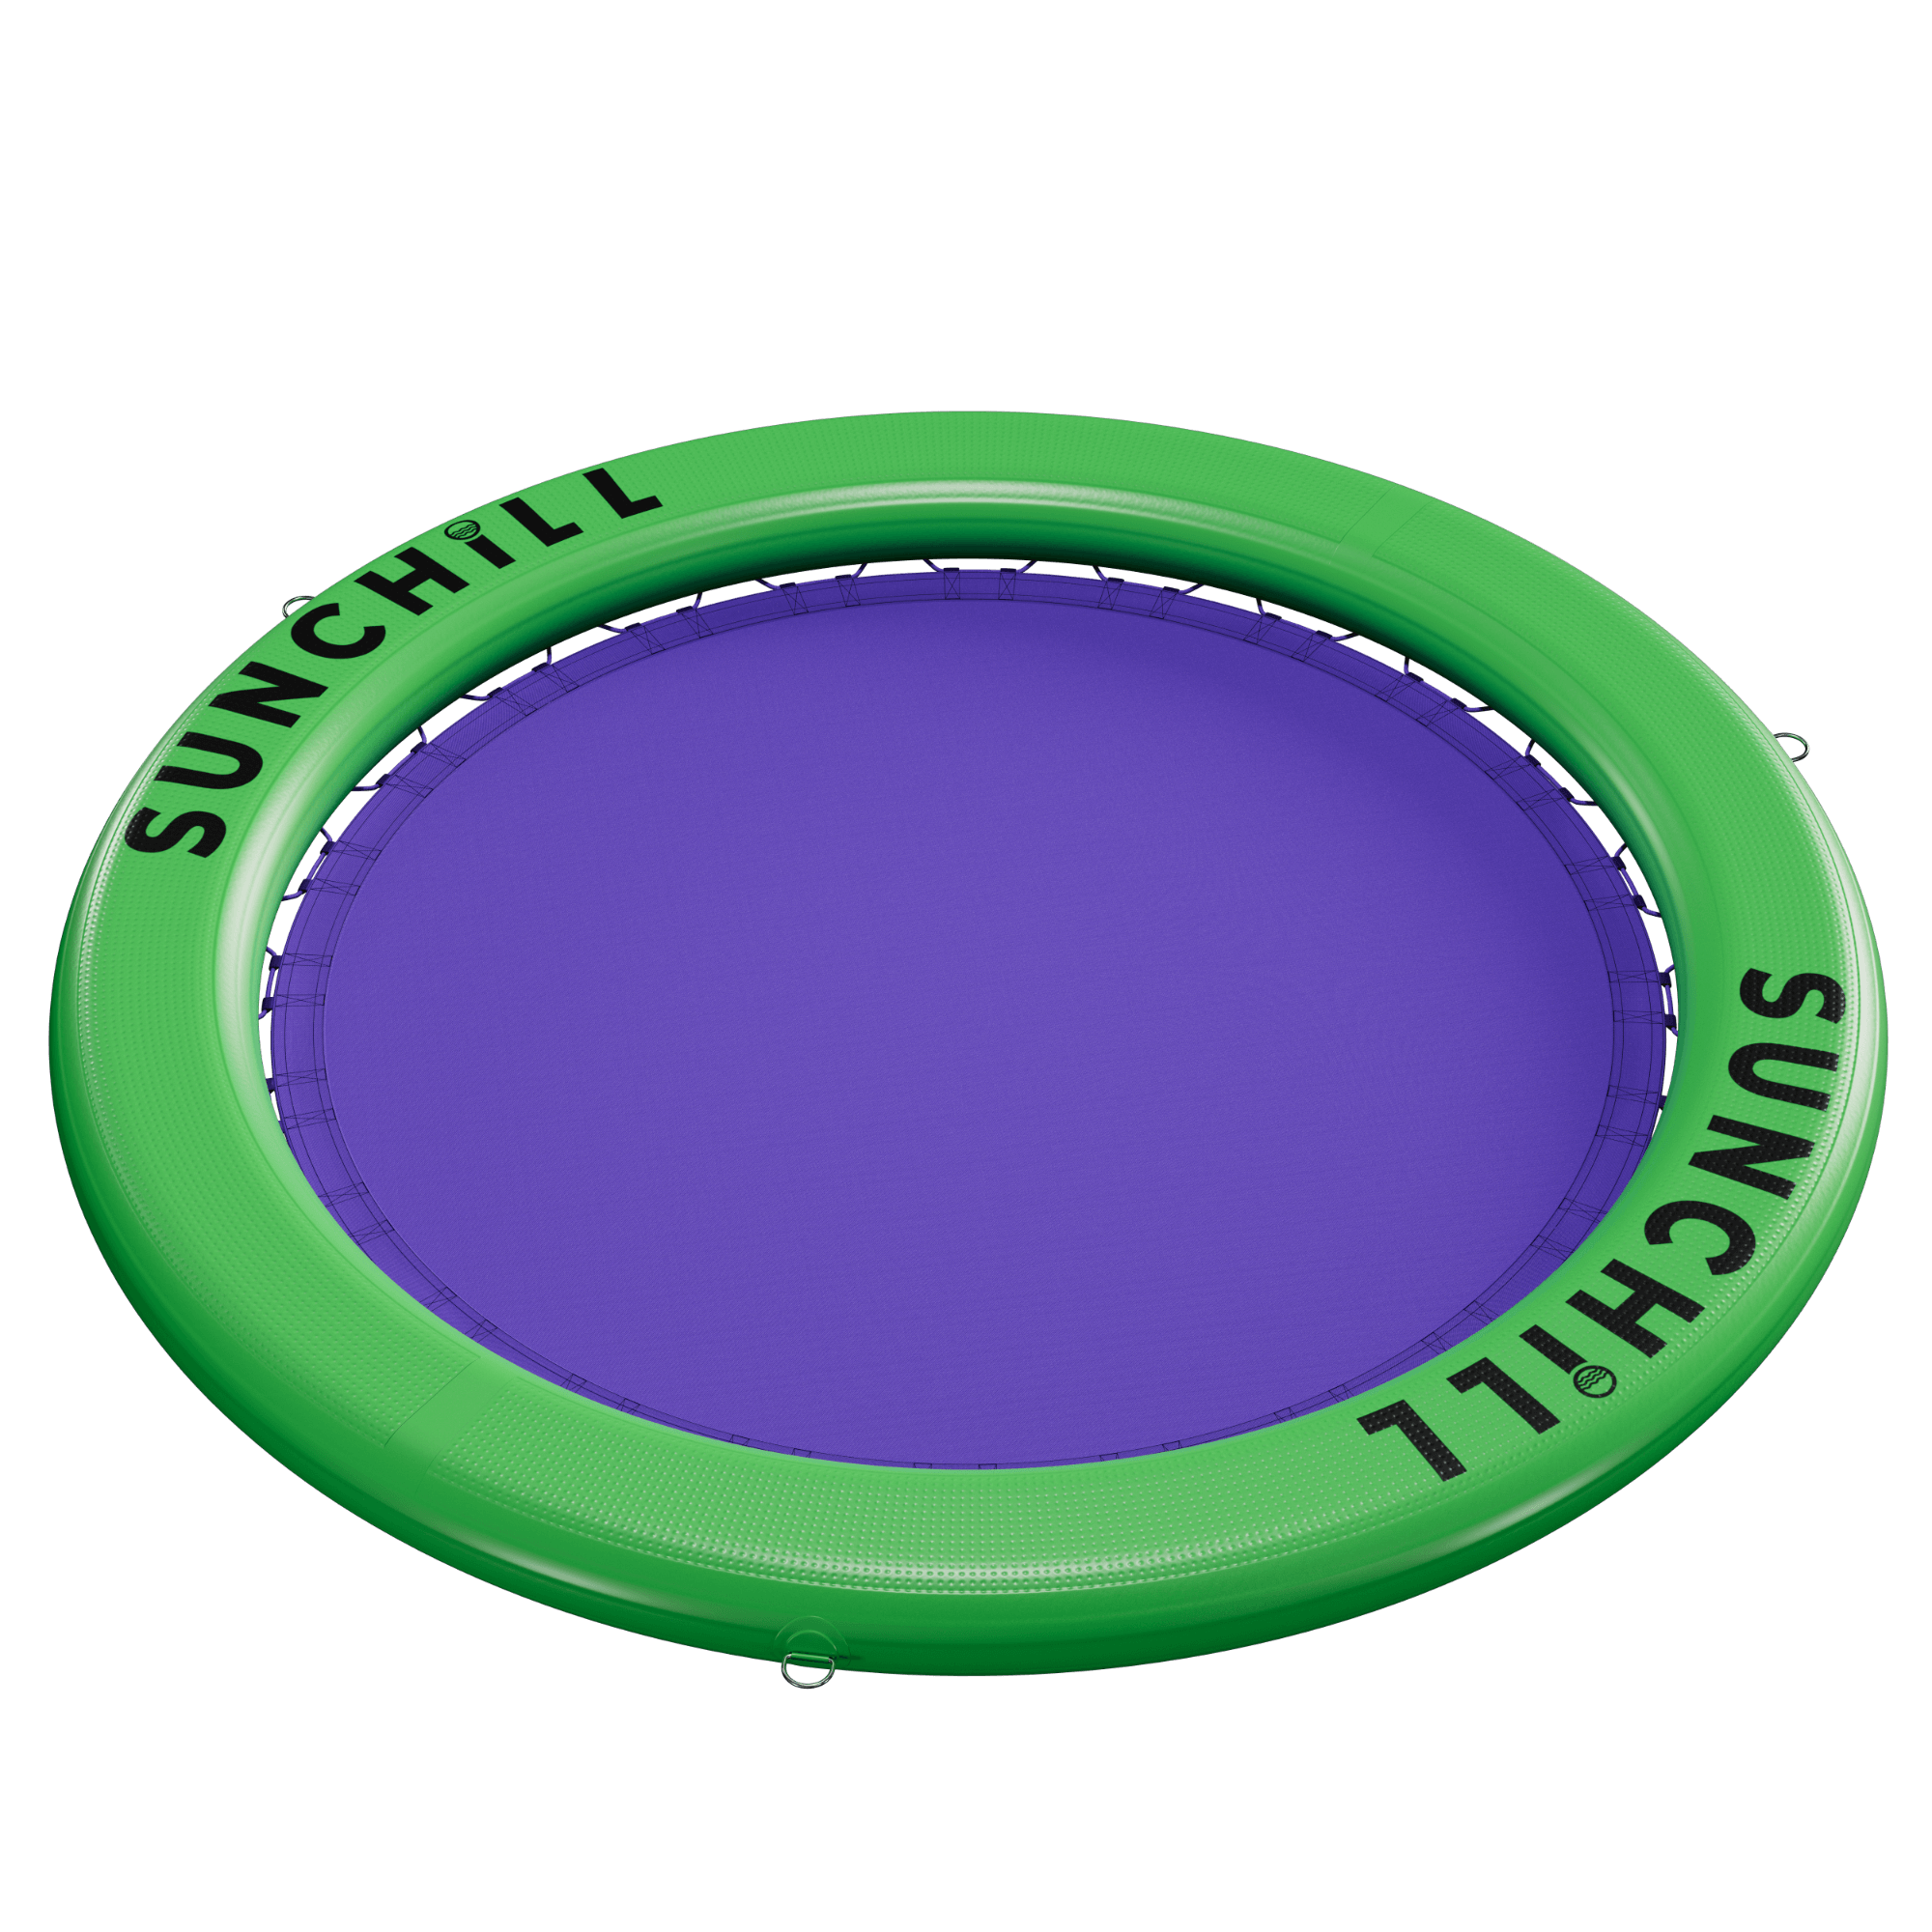 Green Sunchill Water Hammock Float Ring with Purple Netting